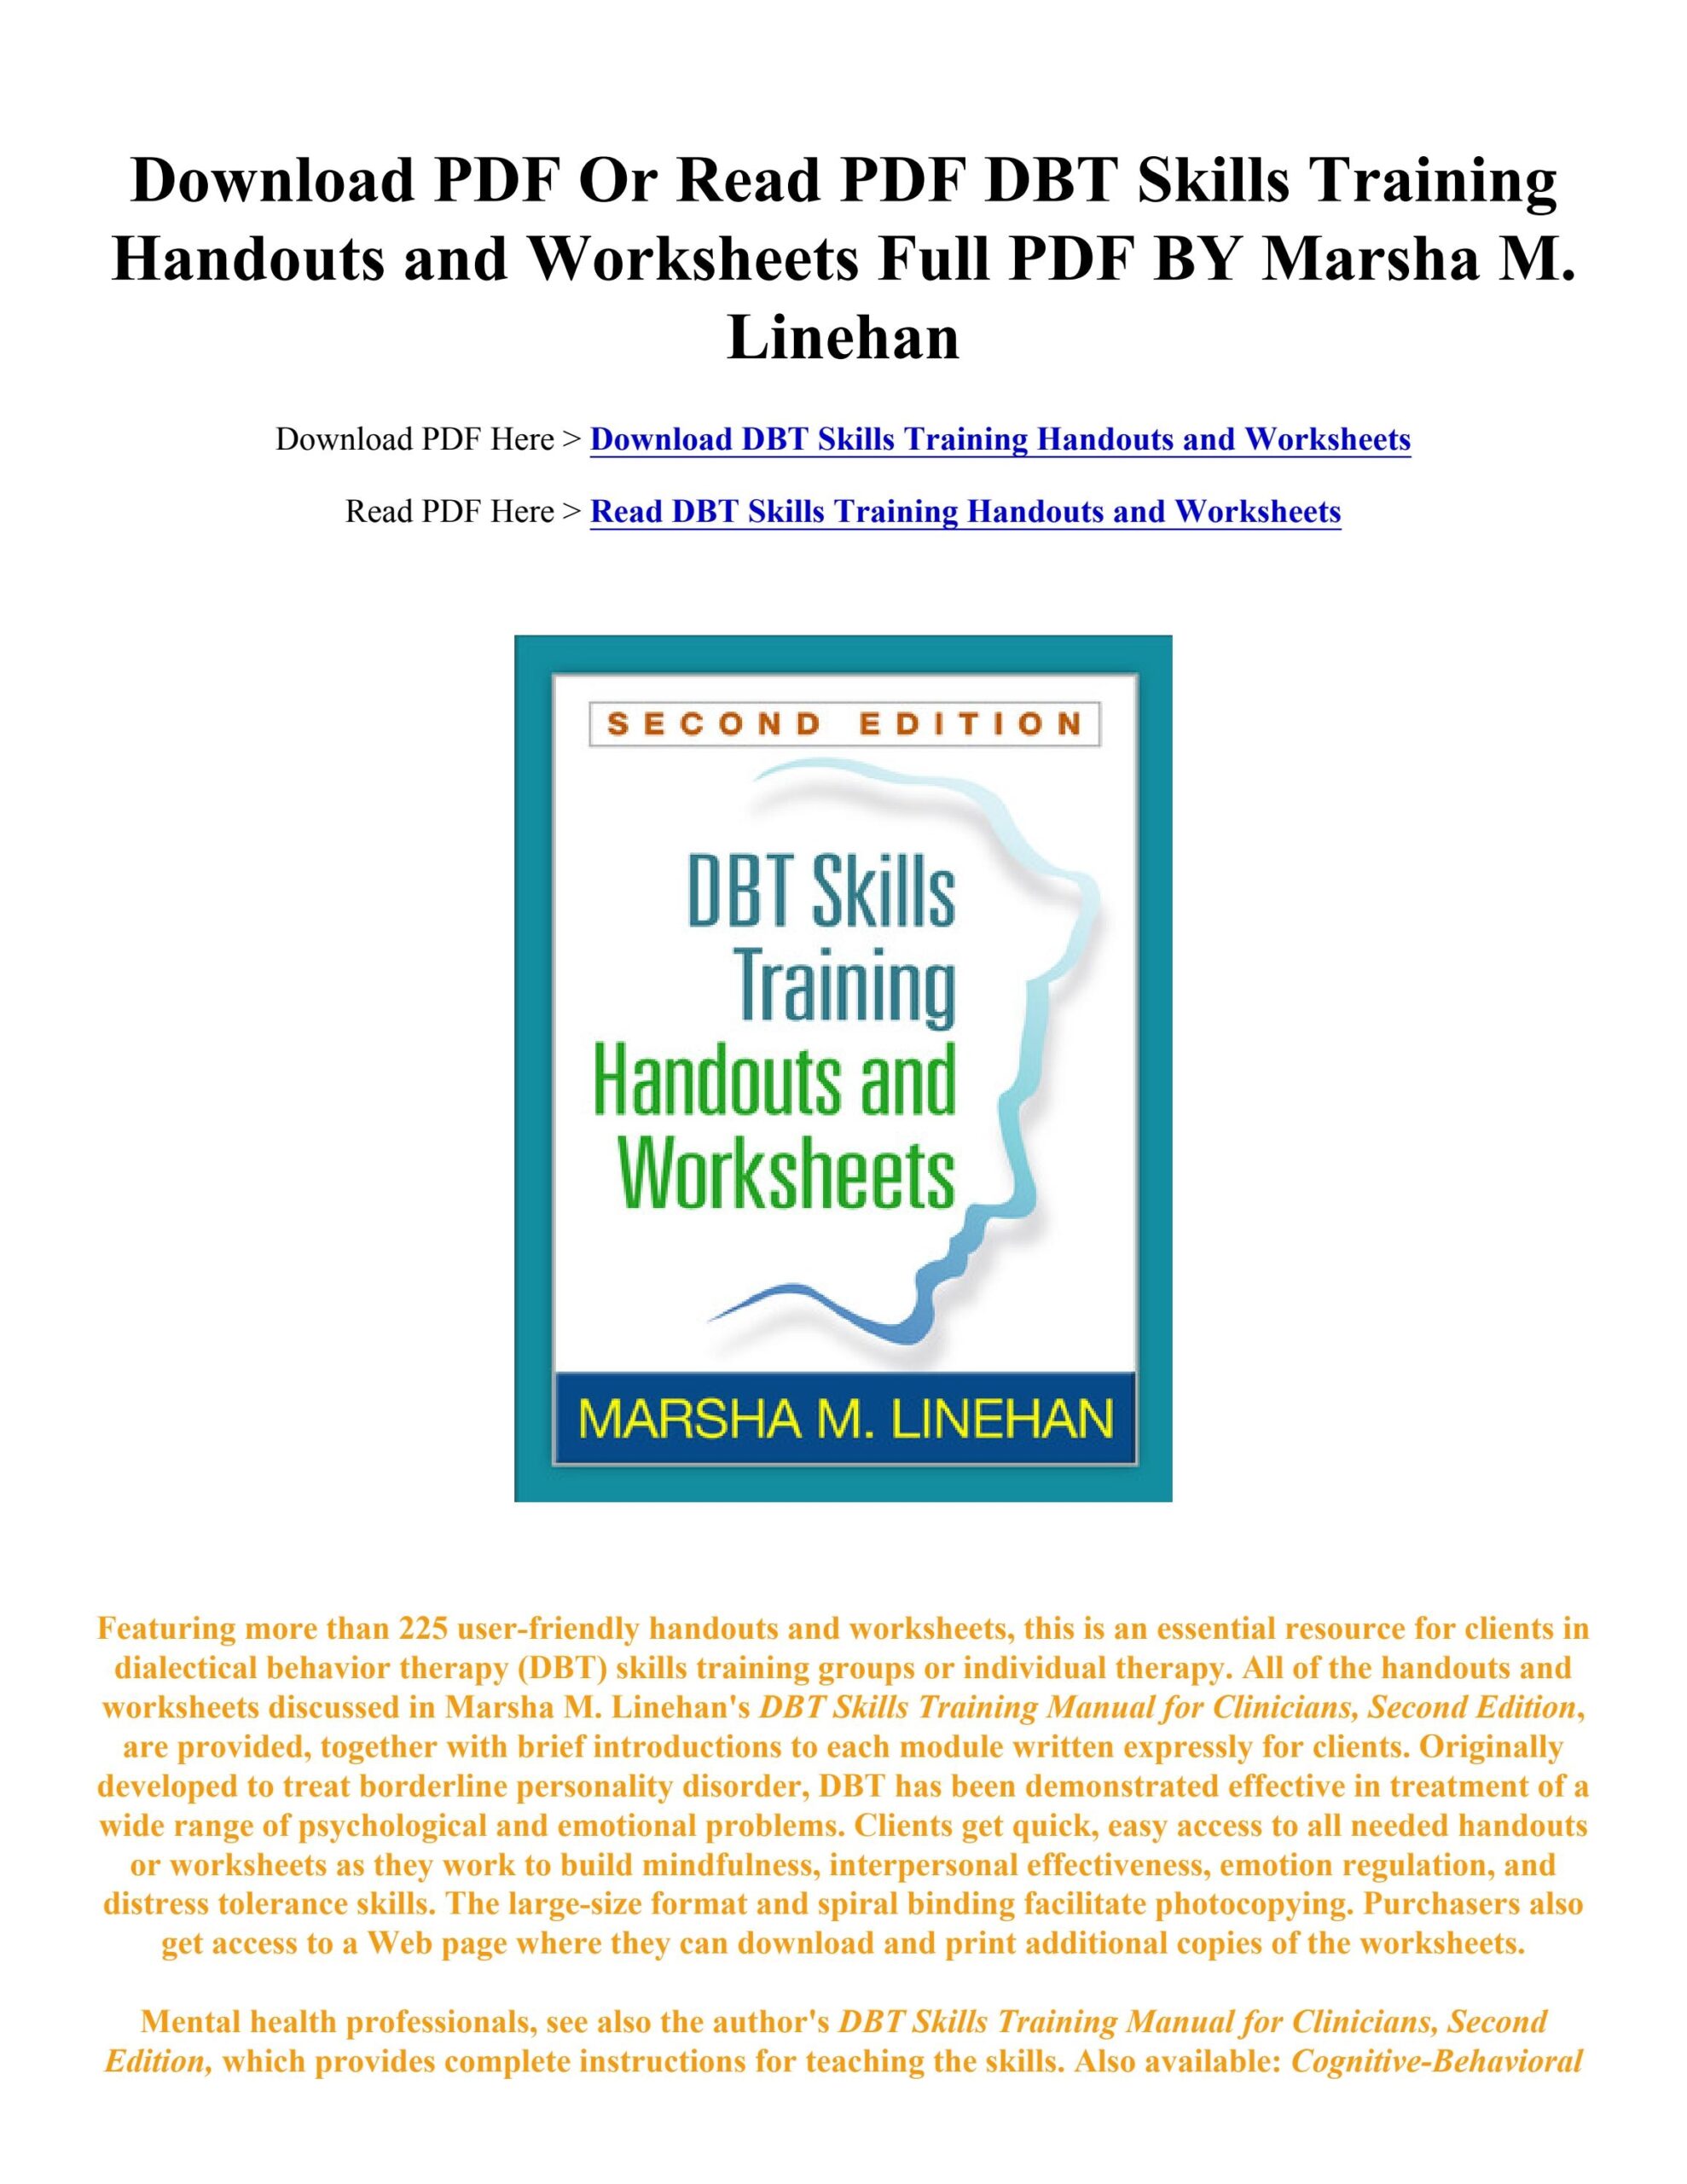 Dbt Skills Training Handouts And Worksheets Linehan Pdf